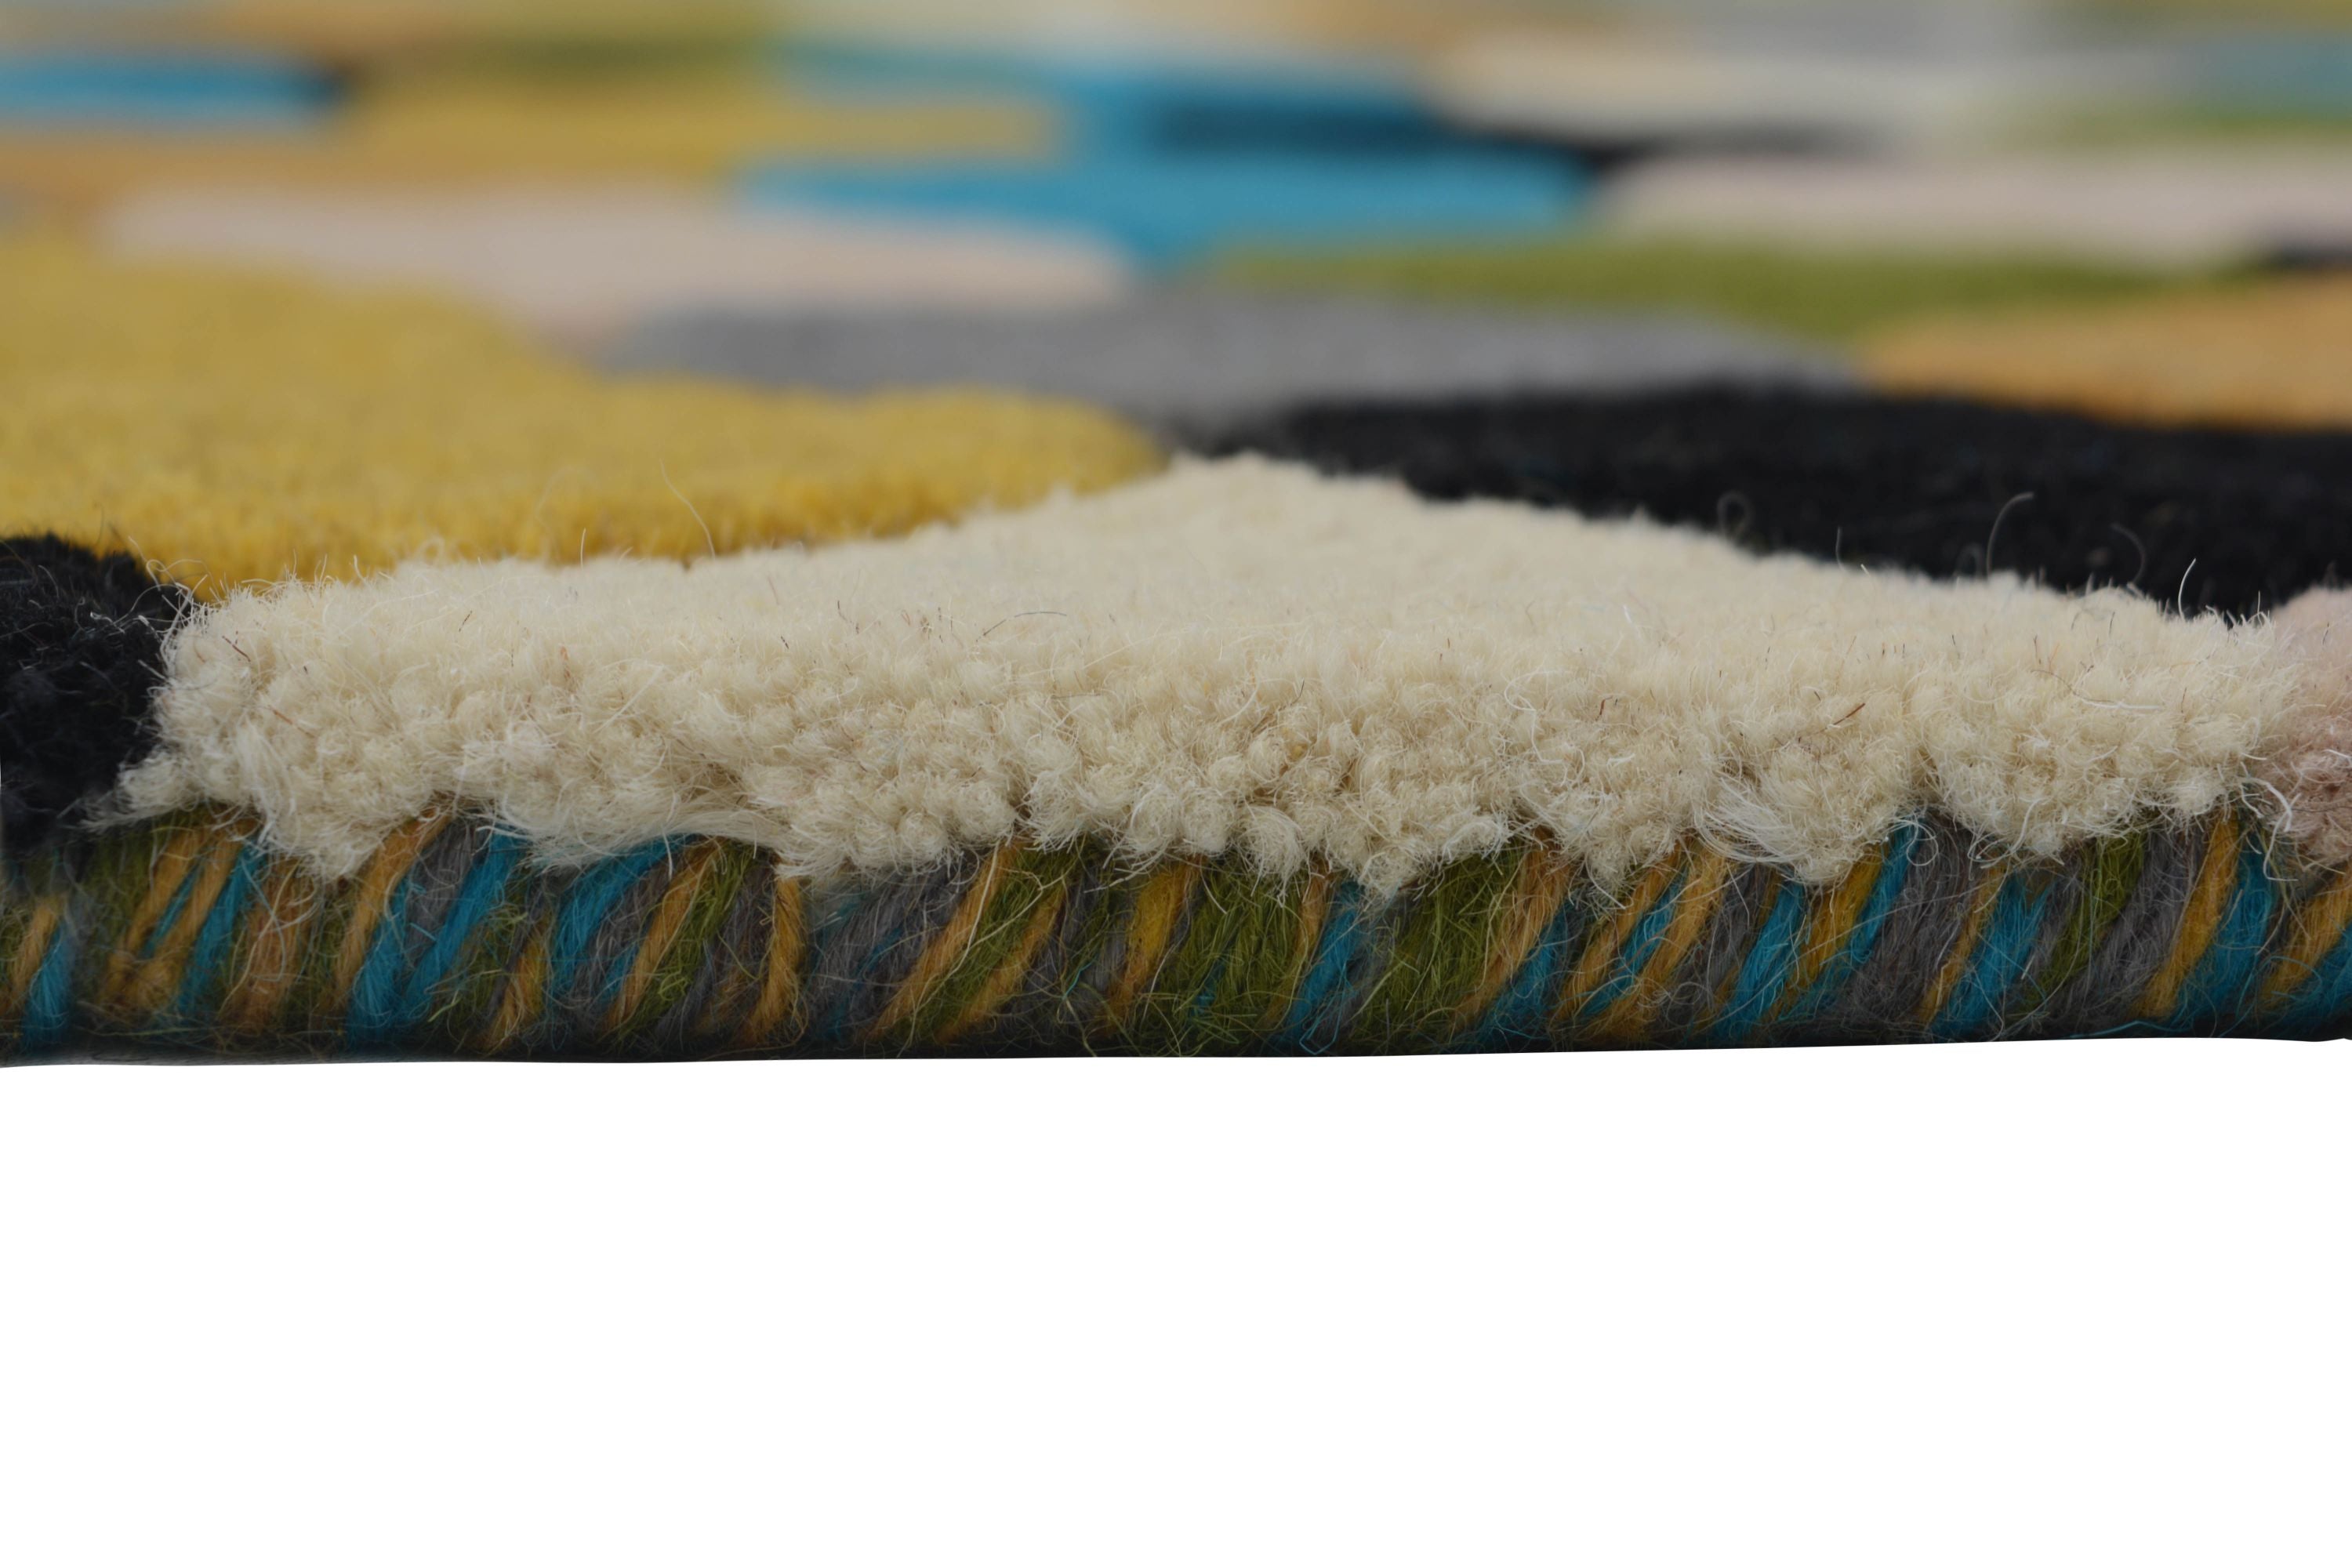 Detec™ Presto Geometric Hand Tufted Wool Carpet